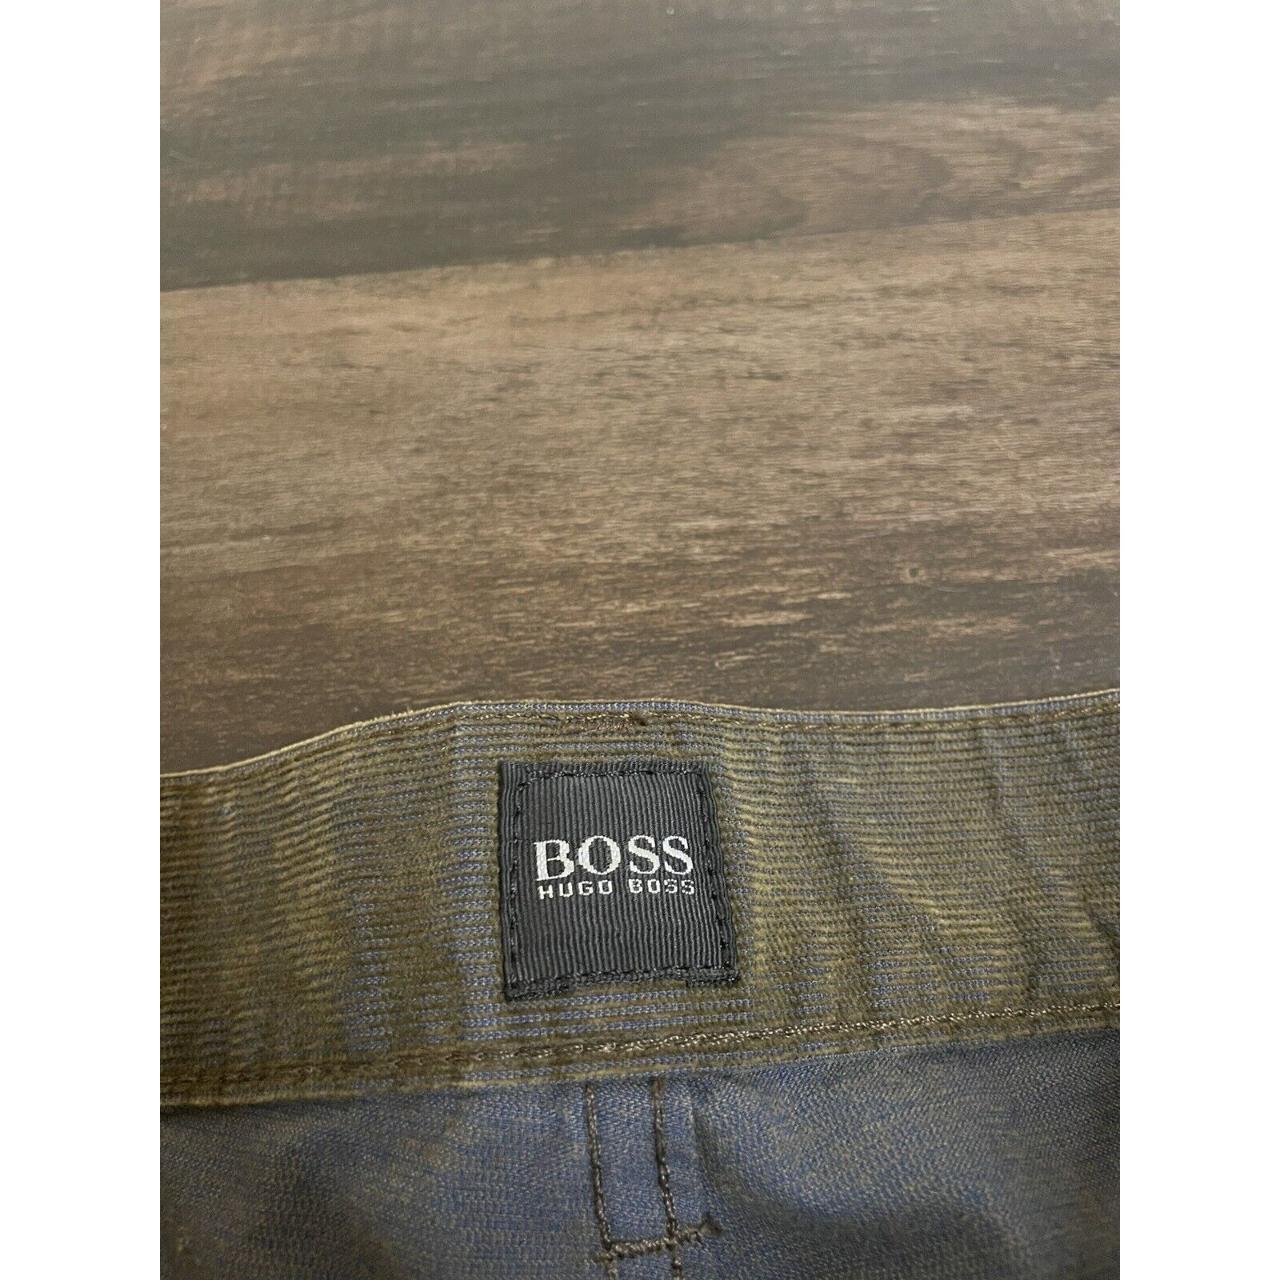 HUGO BOSS MONTANA CORD Jeans - 36x34 - Brown -... - Depop